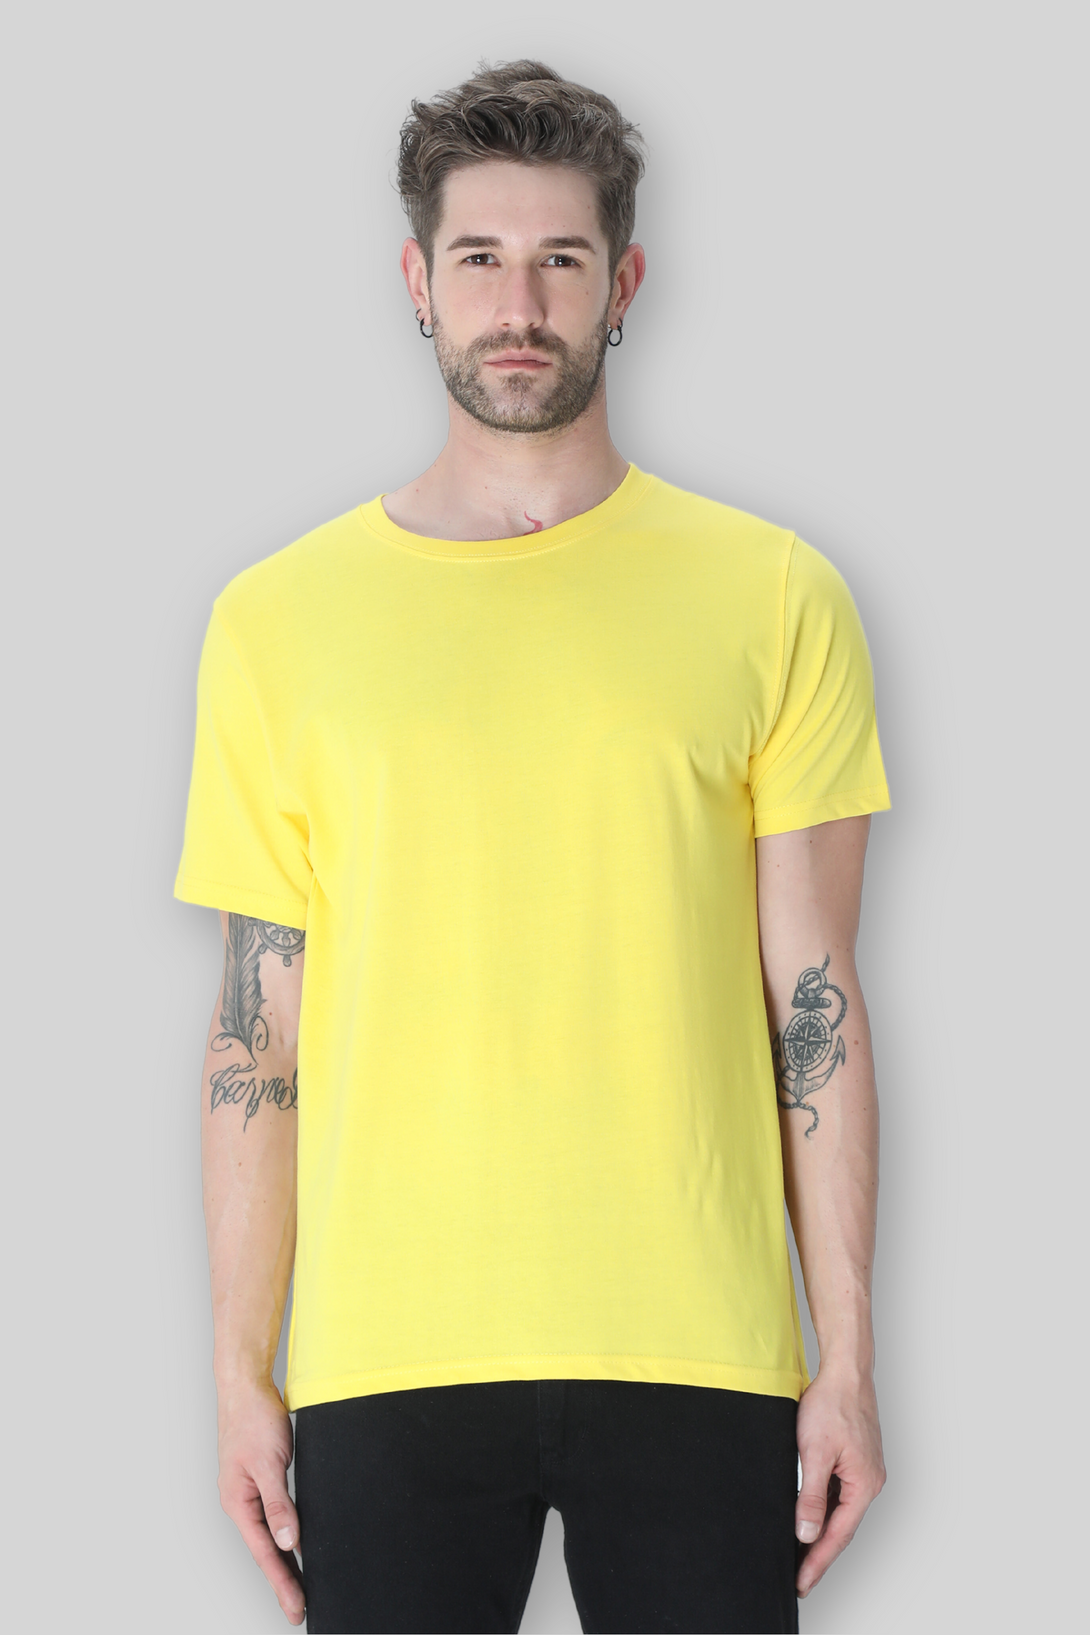 Bright Yellow T-Shirt For Men - WowWaves